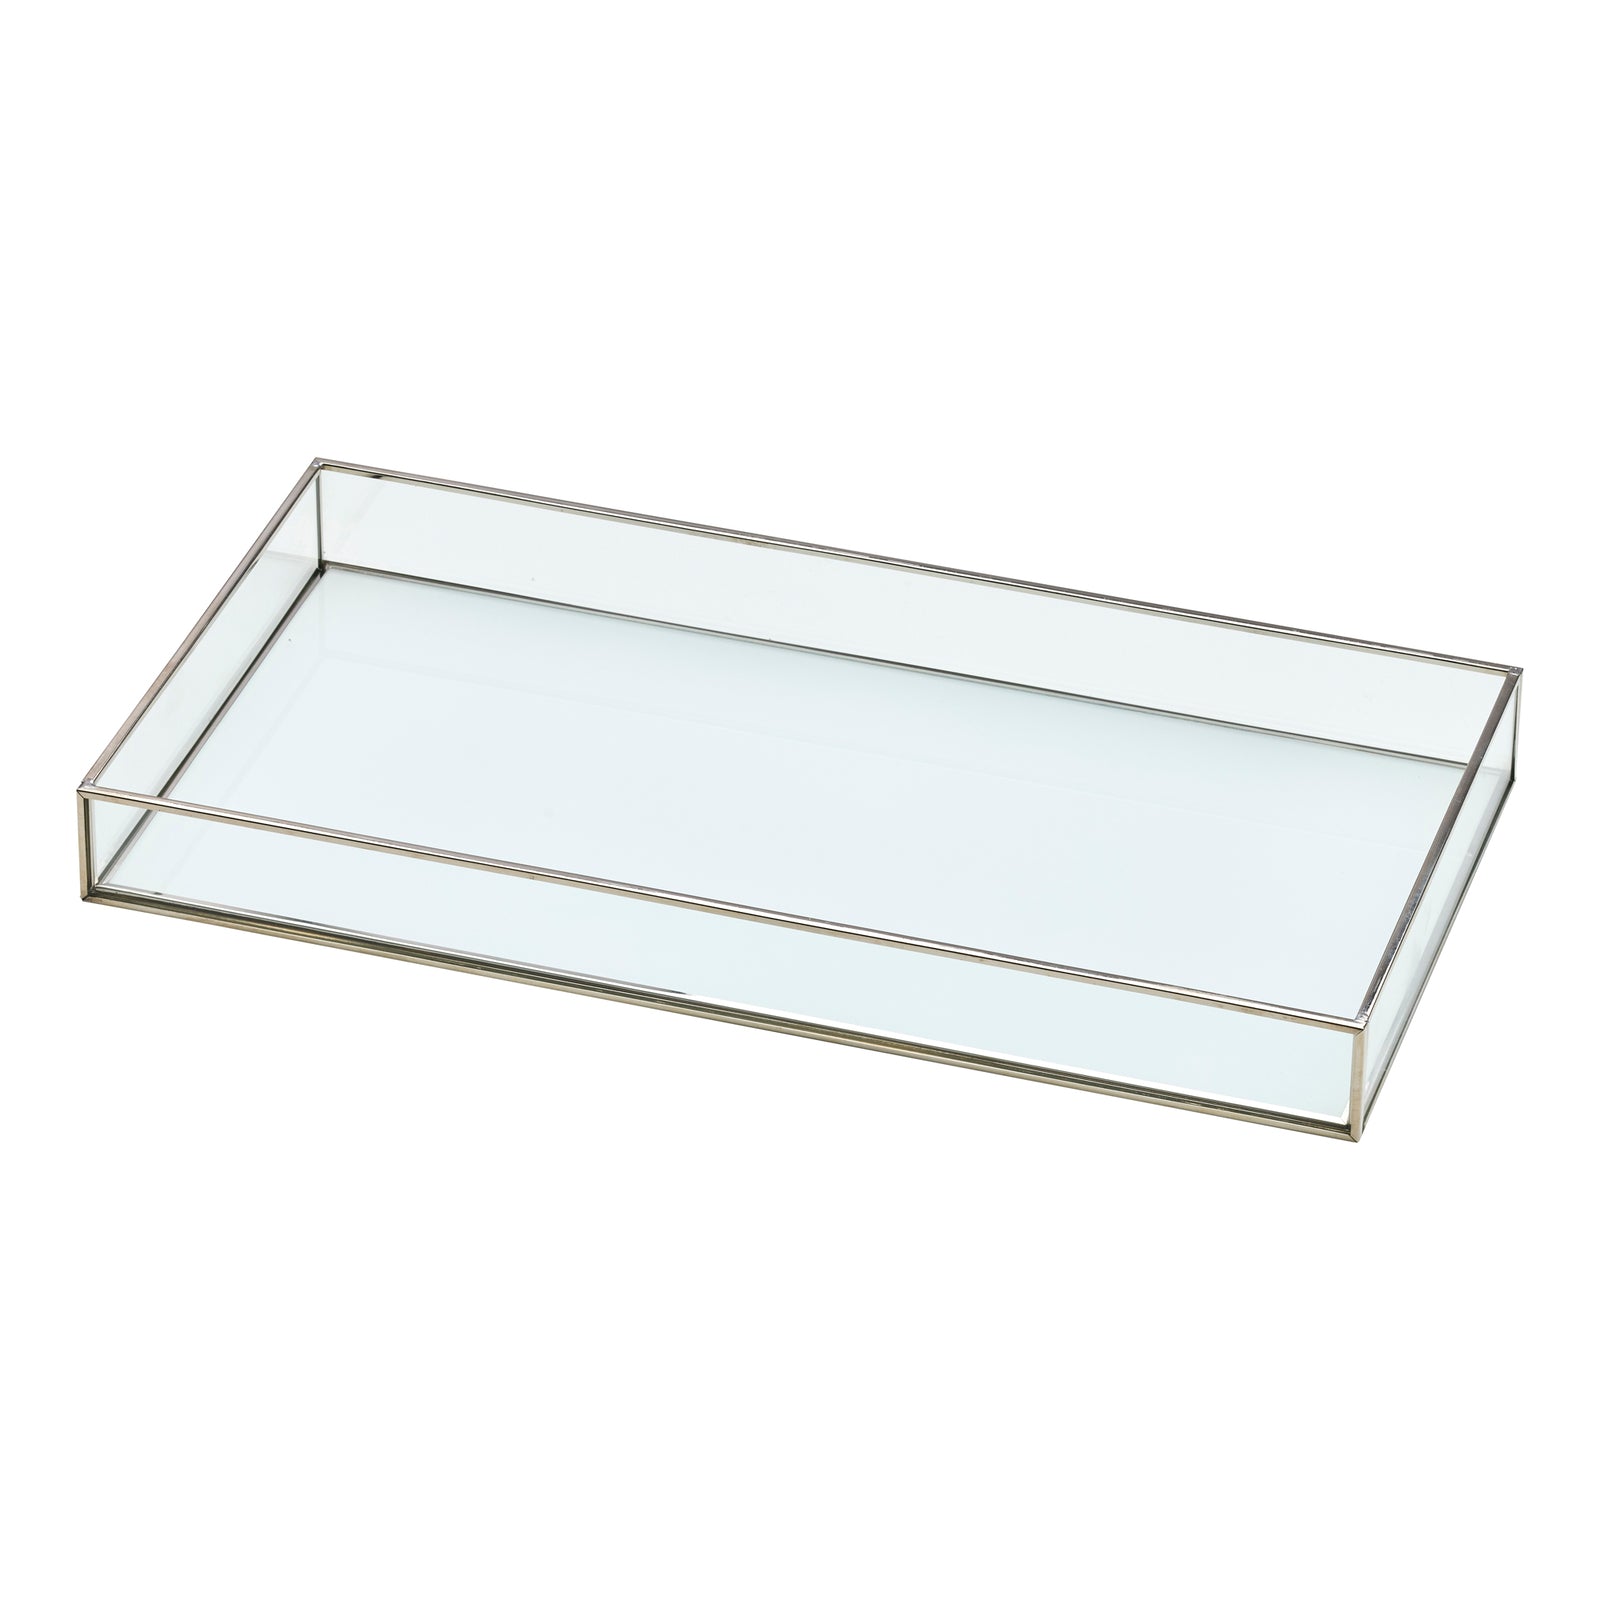 GLASS tray - Silver & White